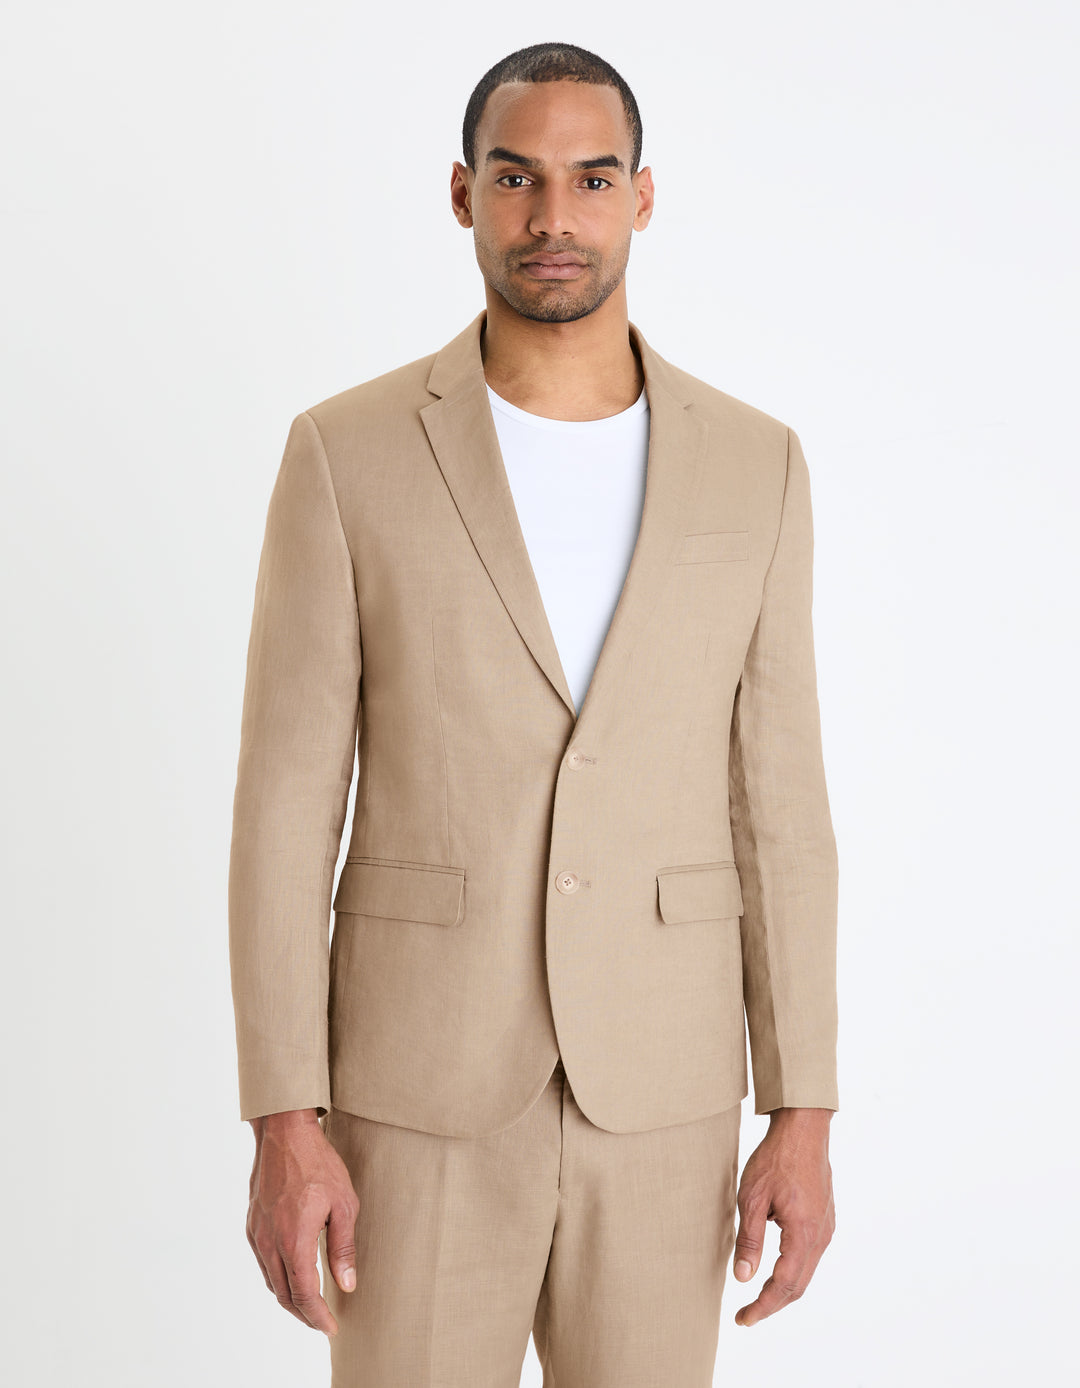 Slim linen suit jacket